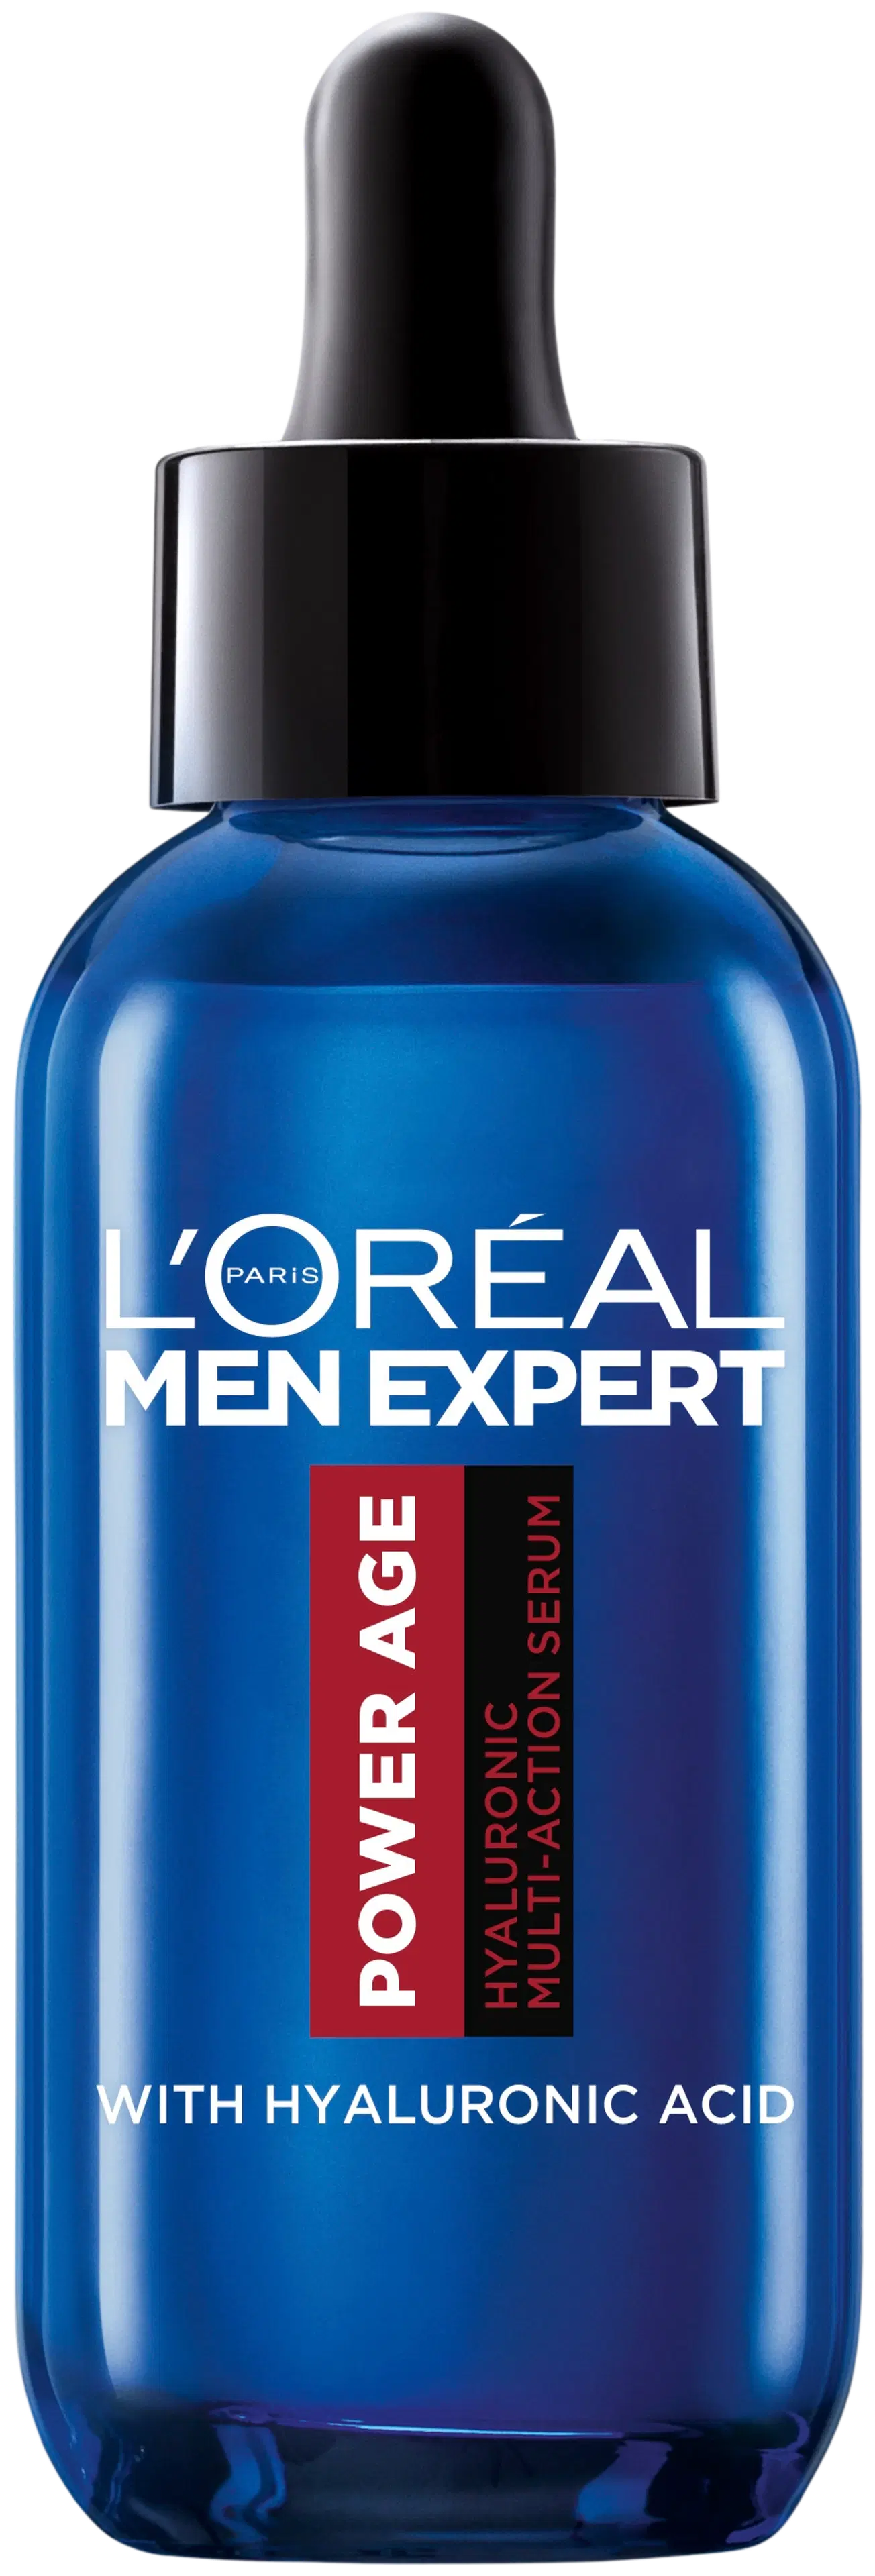 L'Oréal Paris Men Expert Power Age Hyaluronic Multi-Actions seerumi normaalille iholle 30ml